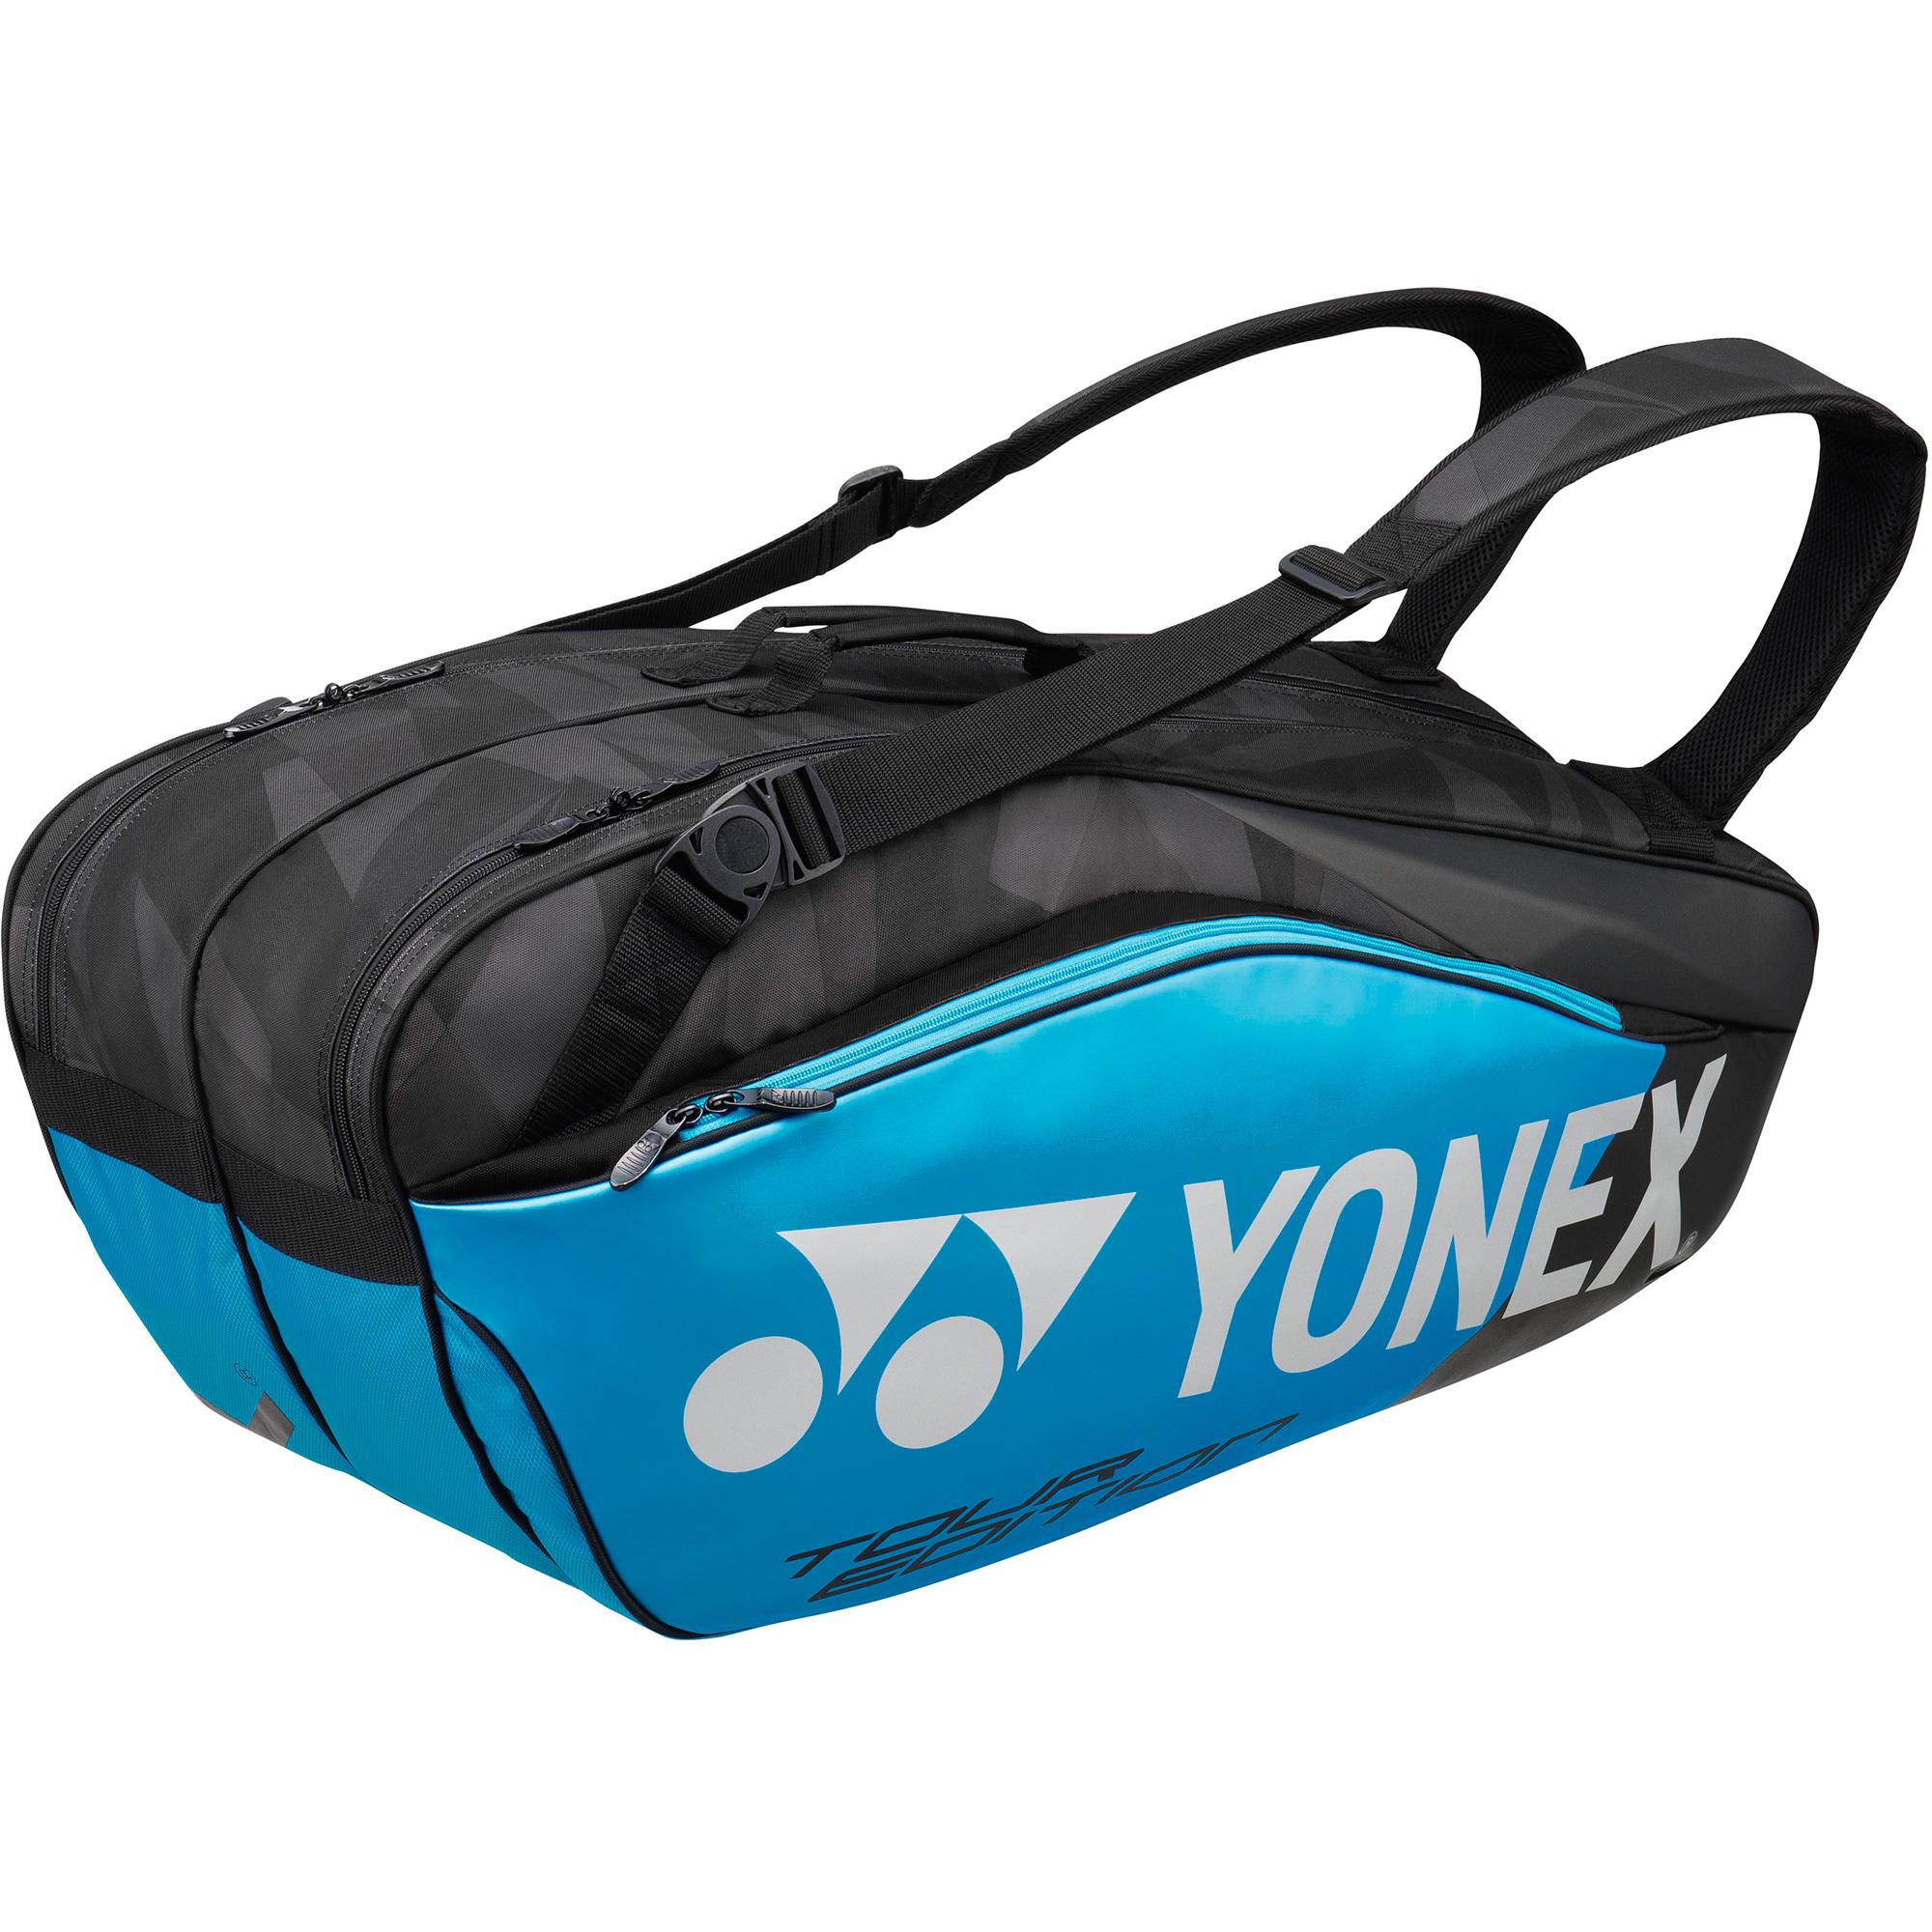 Сумка для бадминтона. Сумка для бадминтона Yonex. Спортивная сумка Yonex. Yonex сумка голубая. Yonex Nanoray 700 FX.